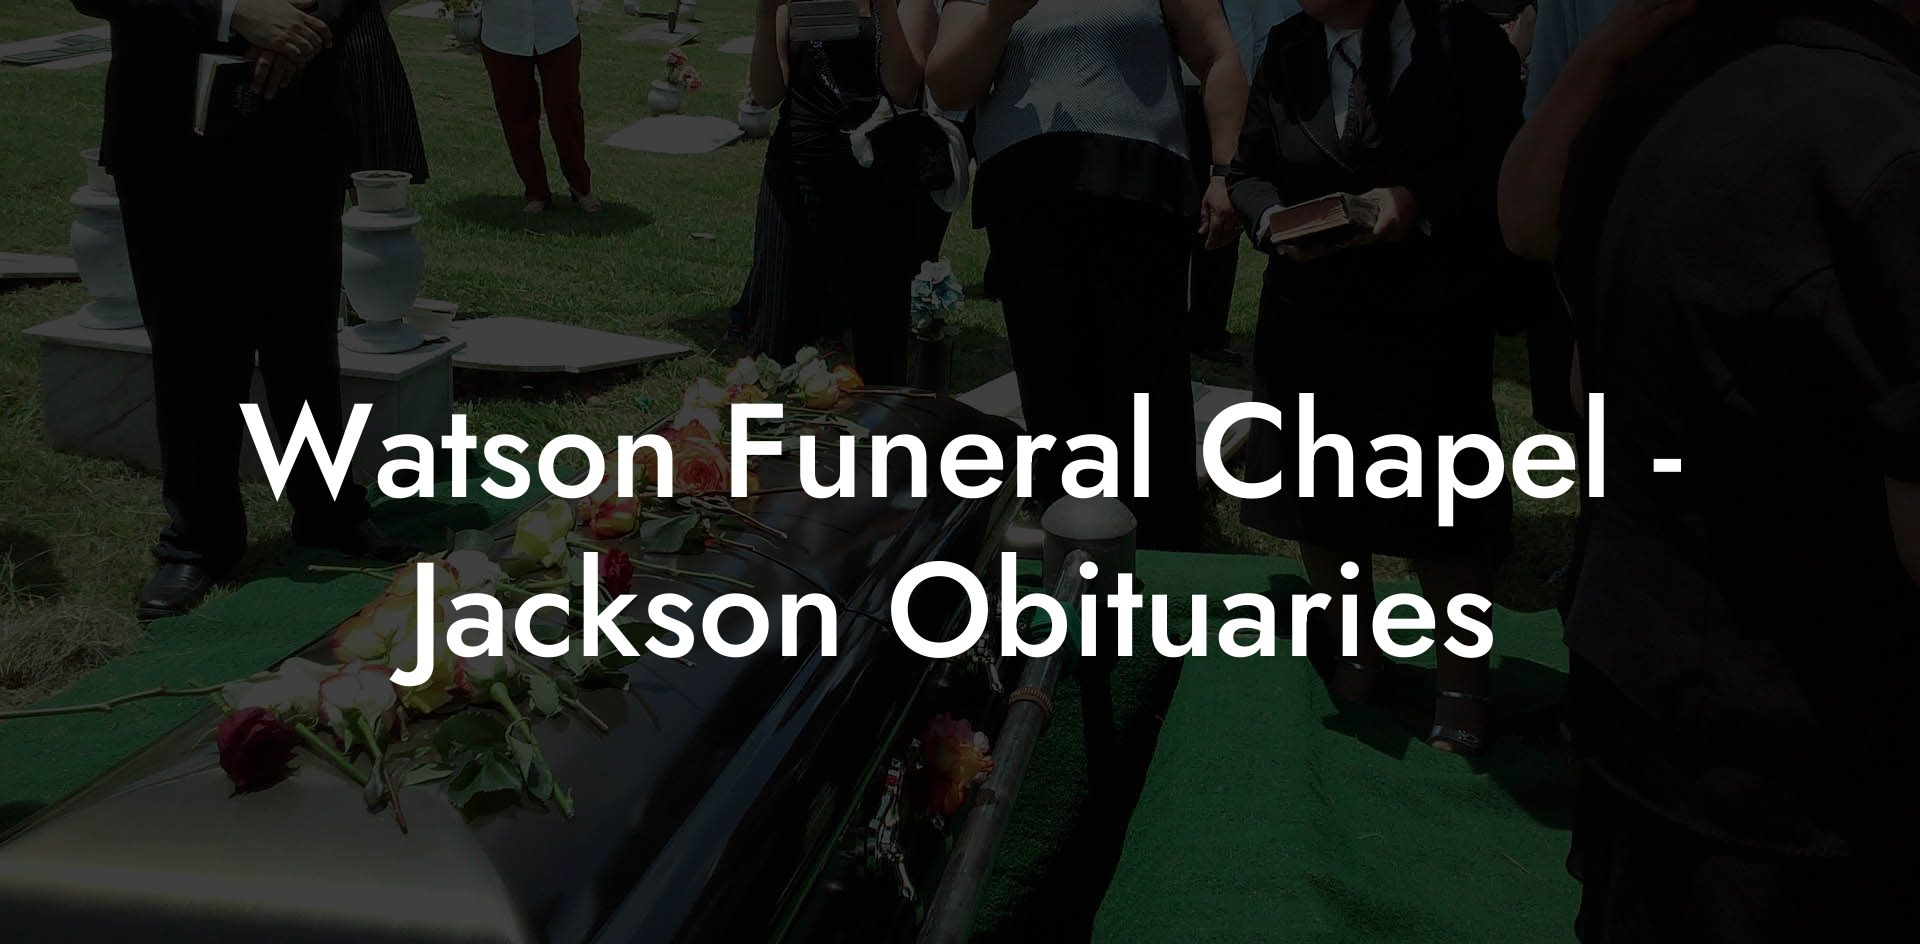 Watson Funeral Chapel - Jackson Obituaries